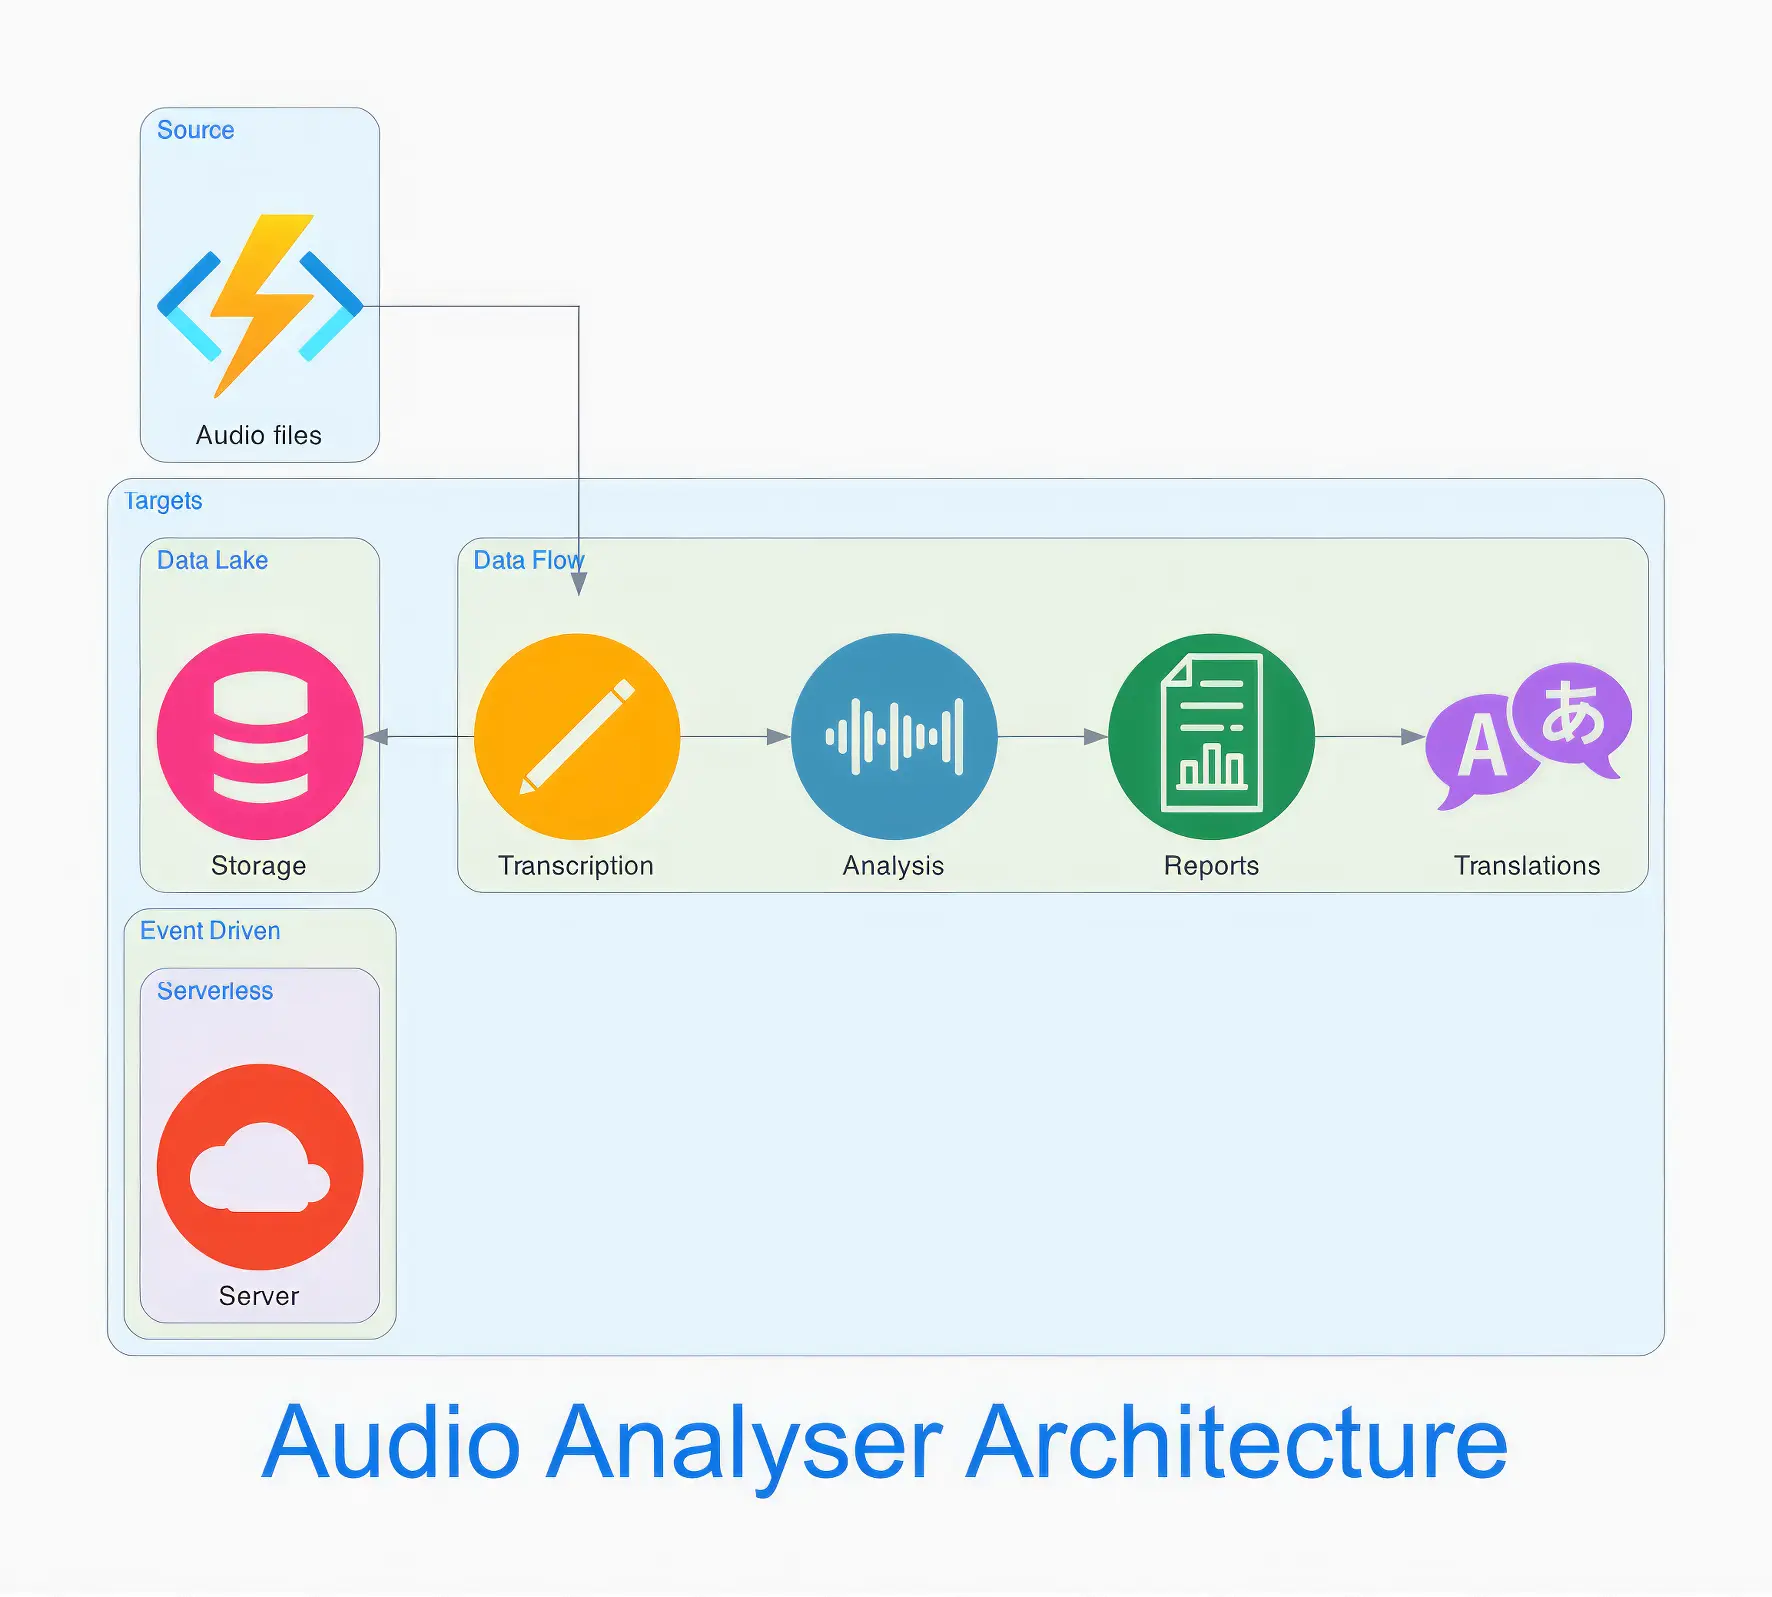 The Audio Analyser Architecture